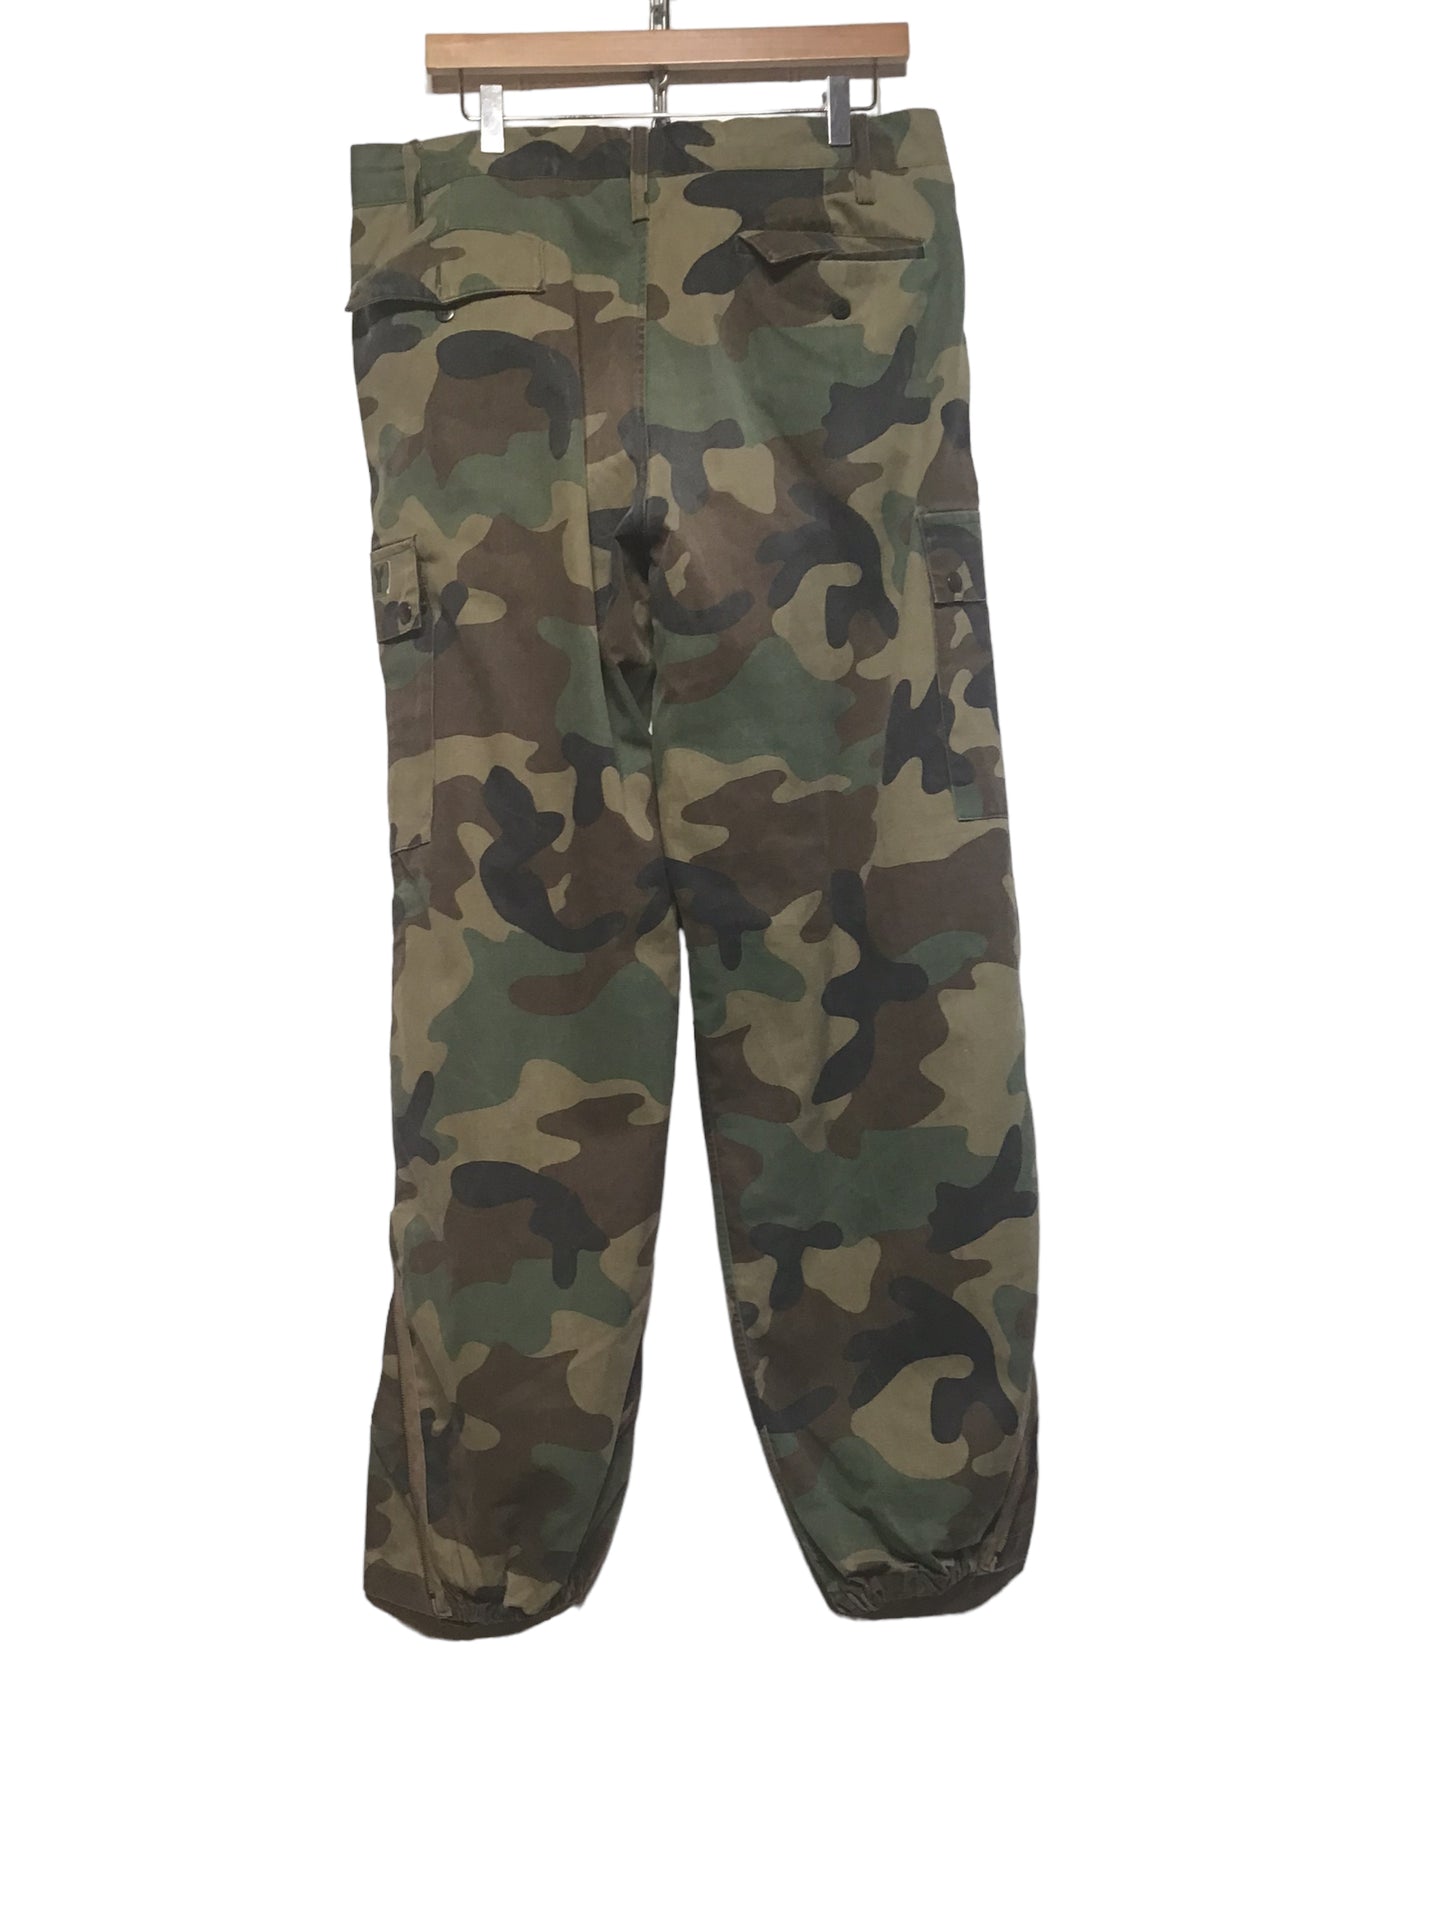 US Army Pants (38x32)